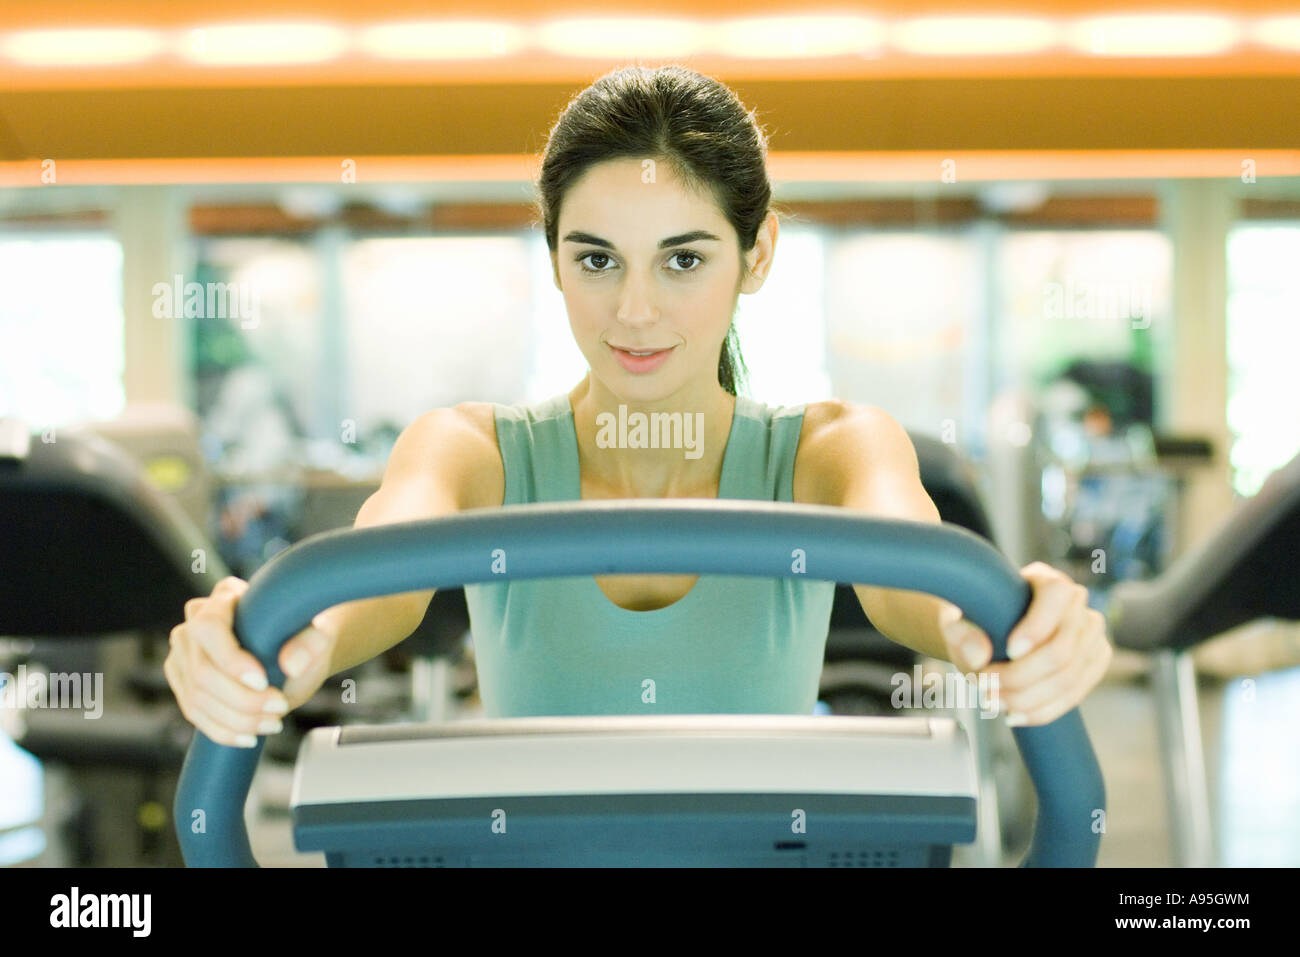 Woman using exercise machine Stock Photo